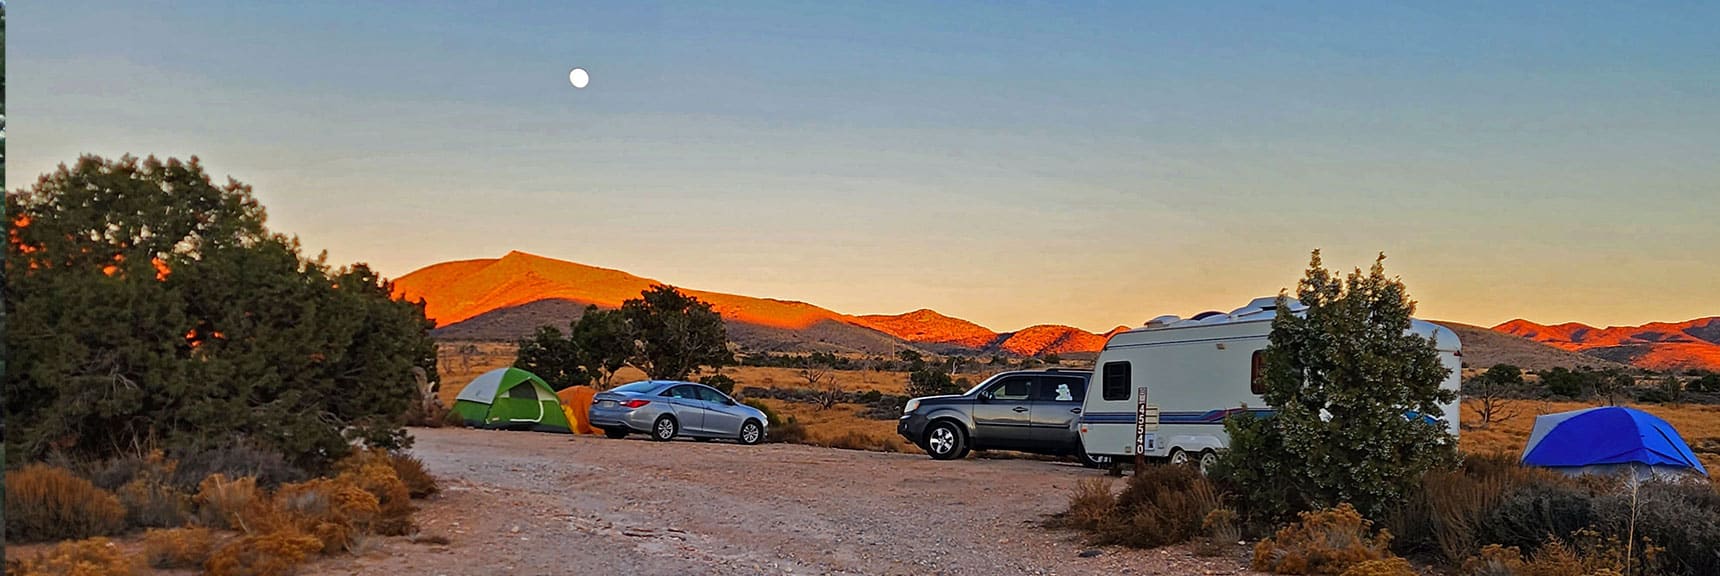 Sunset on Saltgrass Road | Lovell Canyon Camping, Nevada | David Smith | LasVegasAreaTrails.com